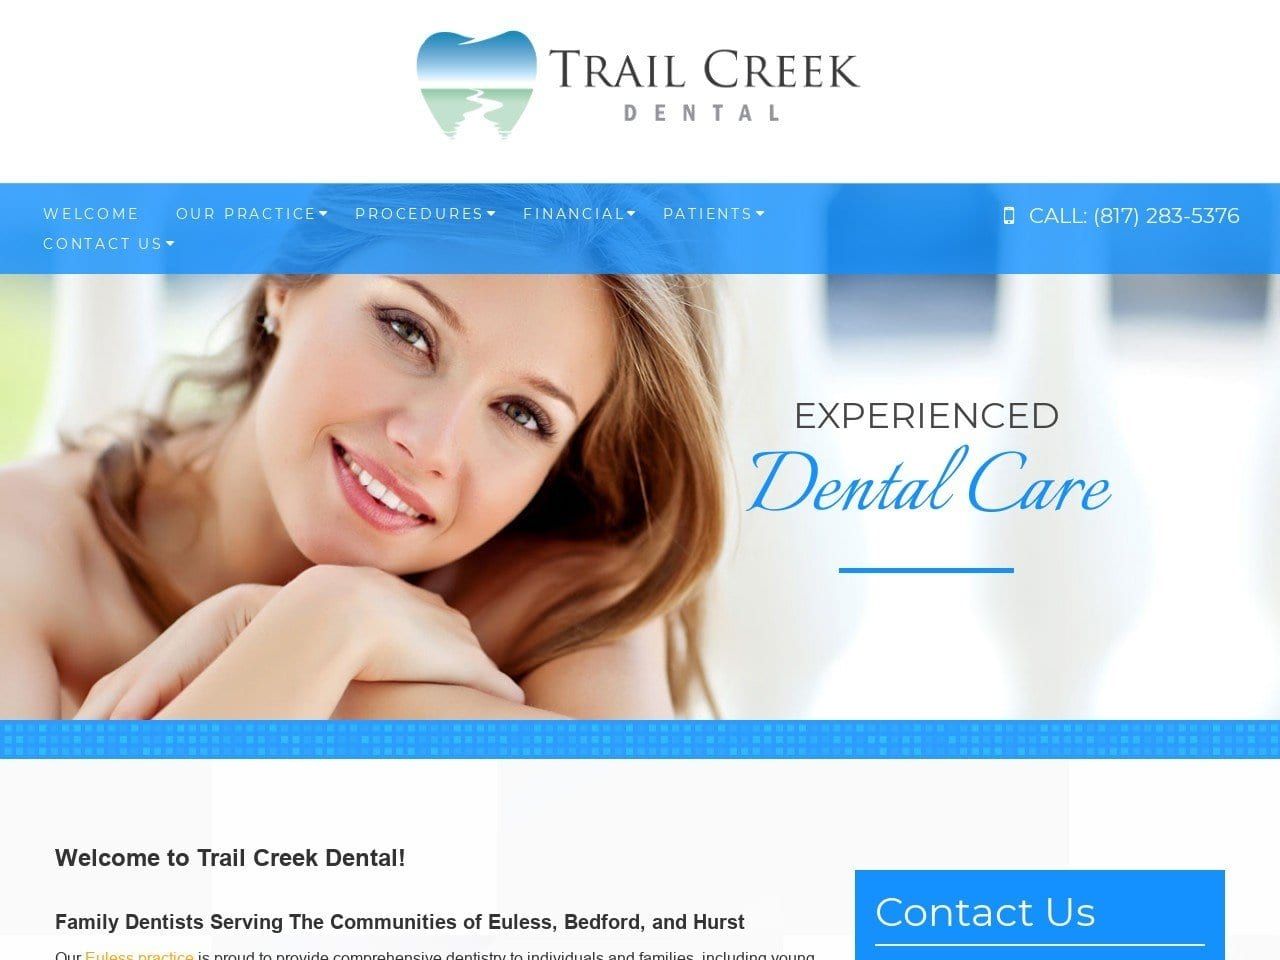 Trail Creek Dental Hinson Douglas A DDS Website Screenshot from trailcreekdental.com